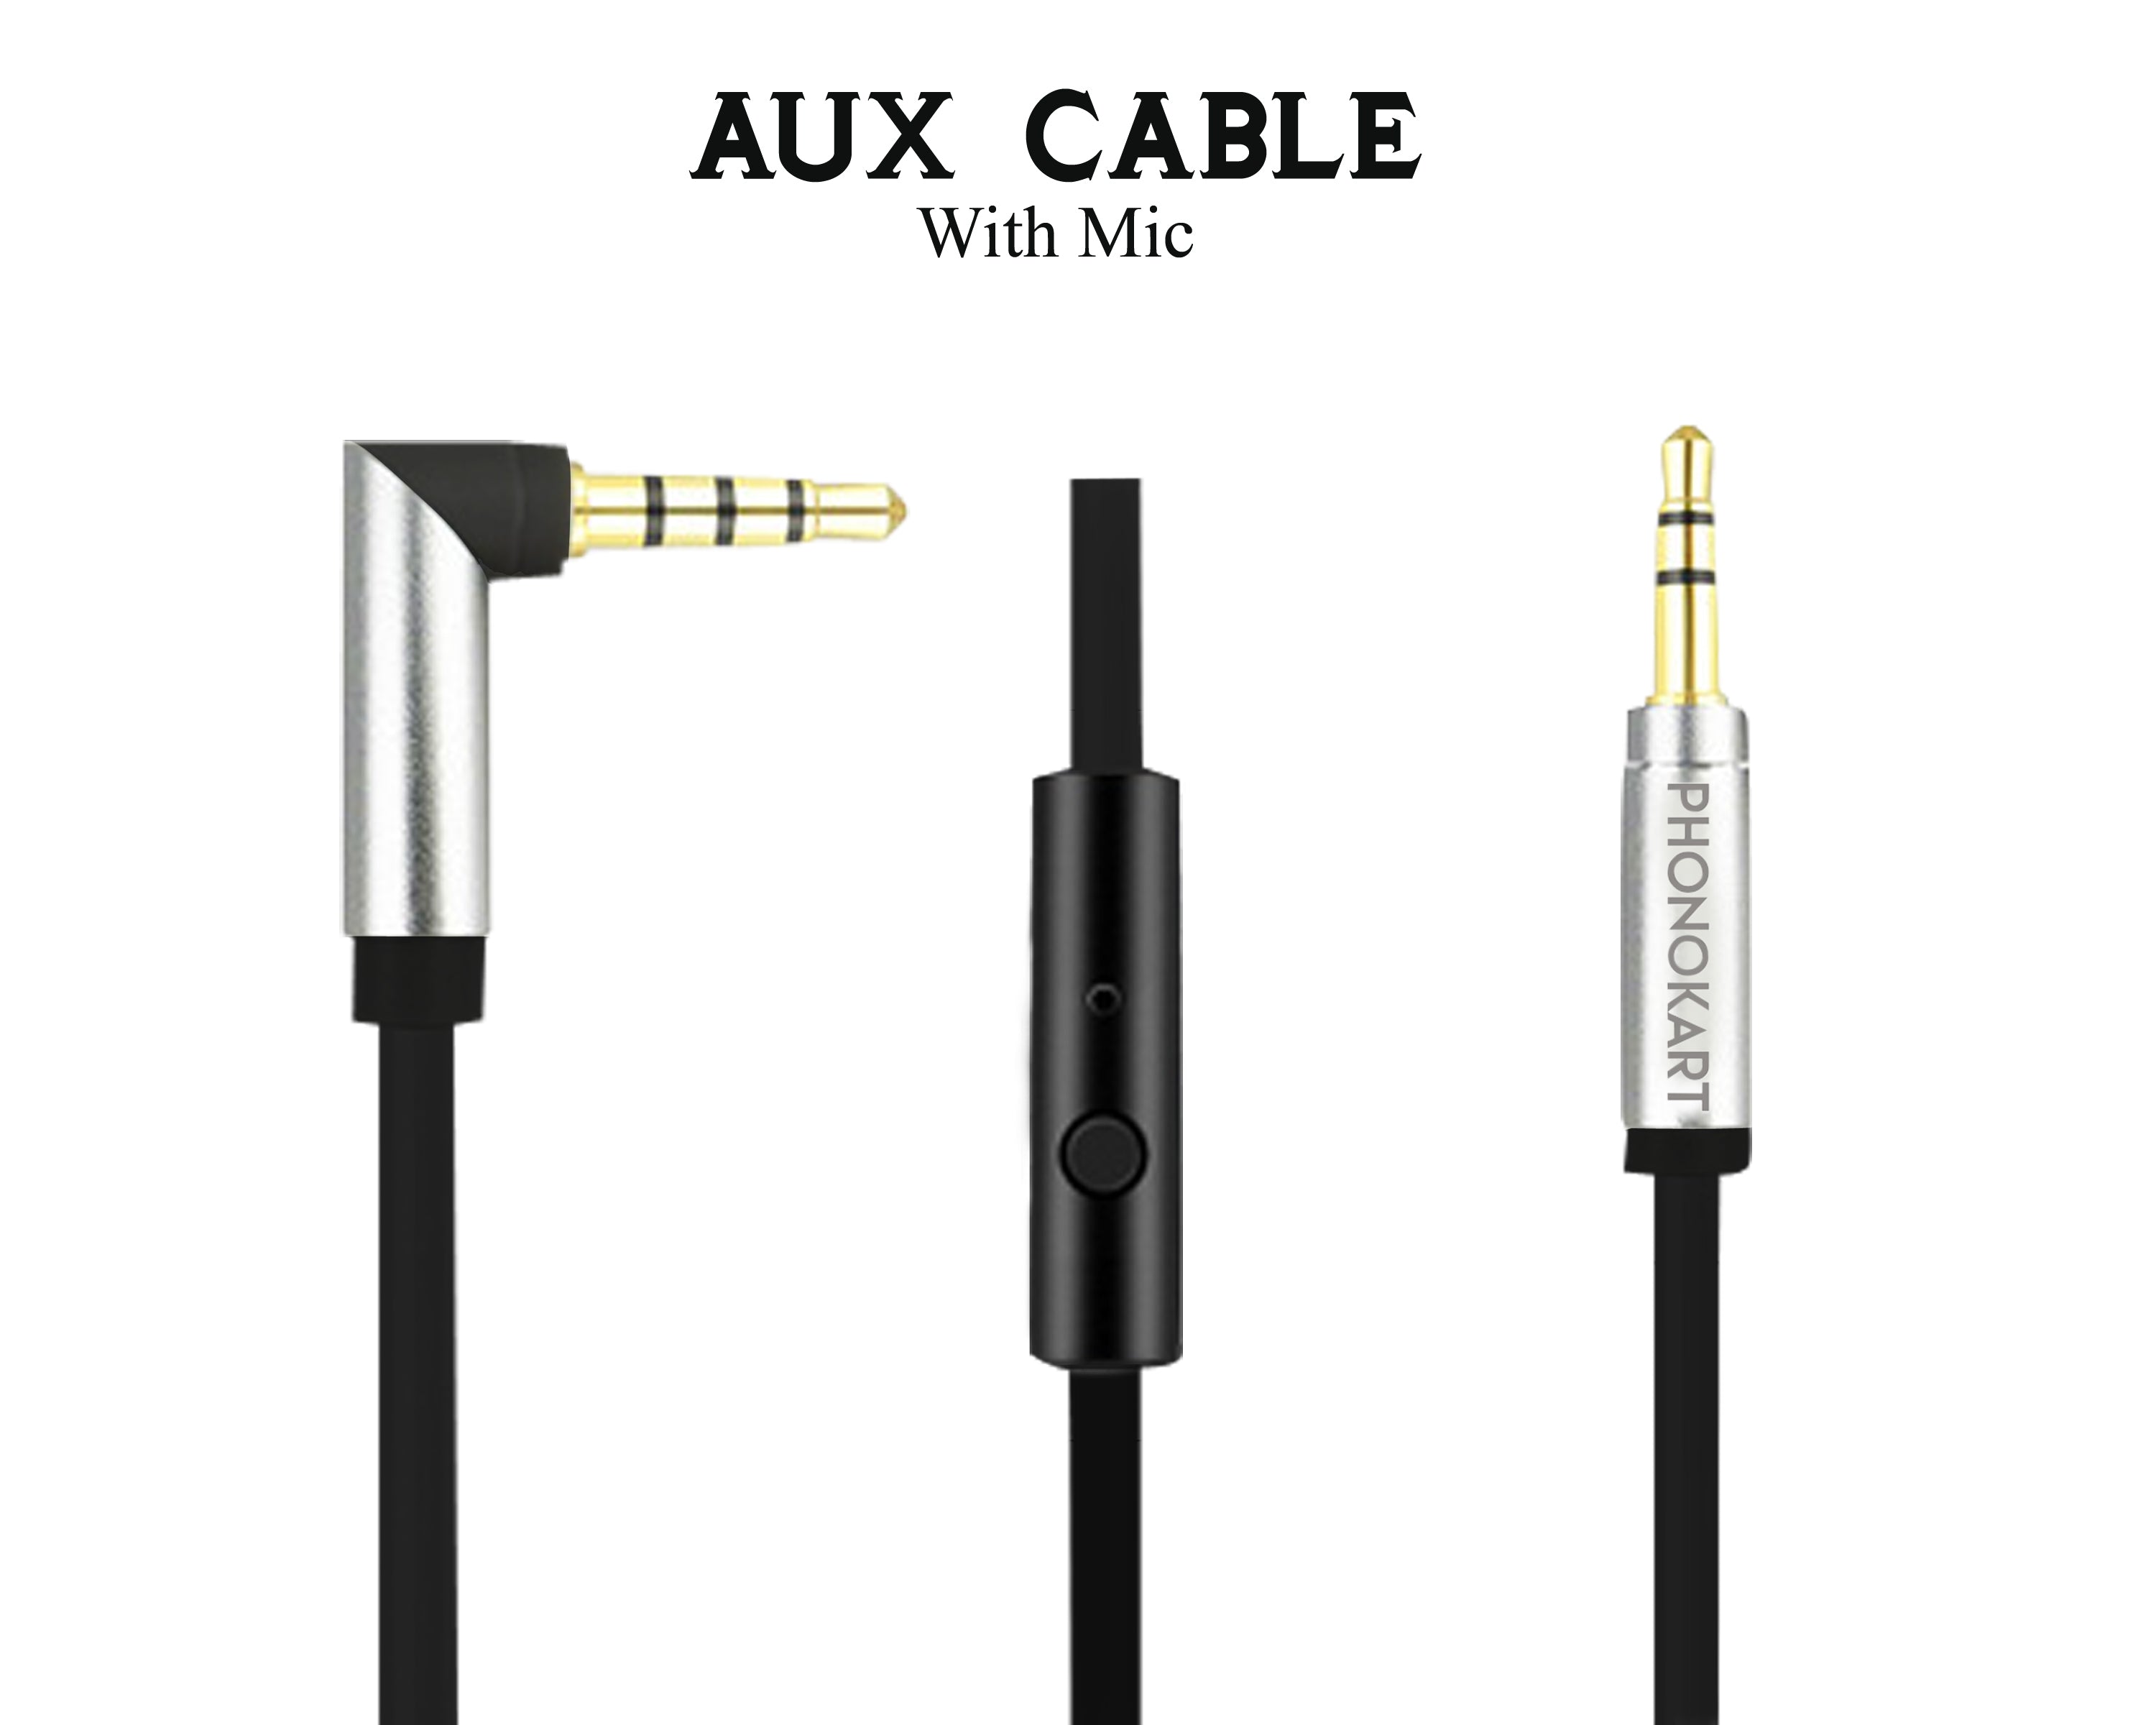 Aux audio cable Cable ISound 2 (1.5M)